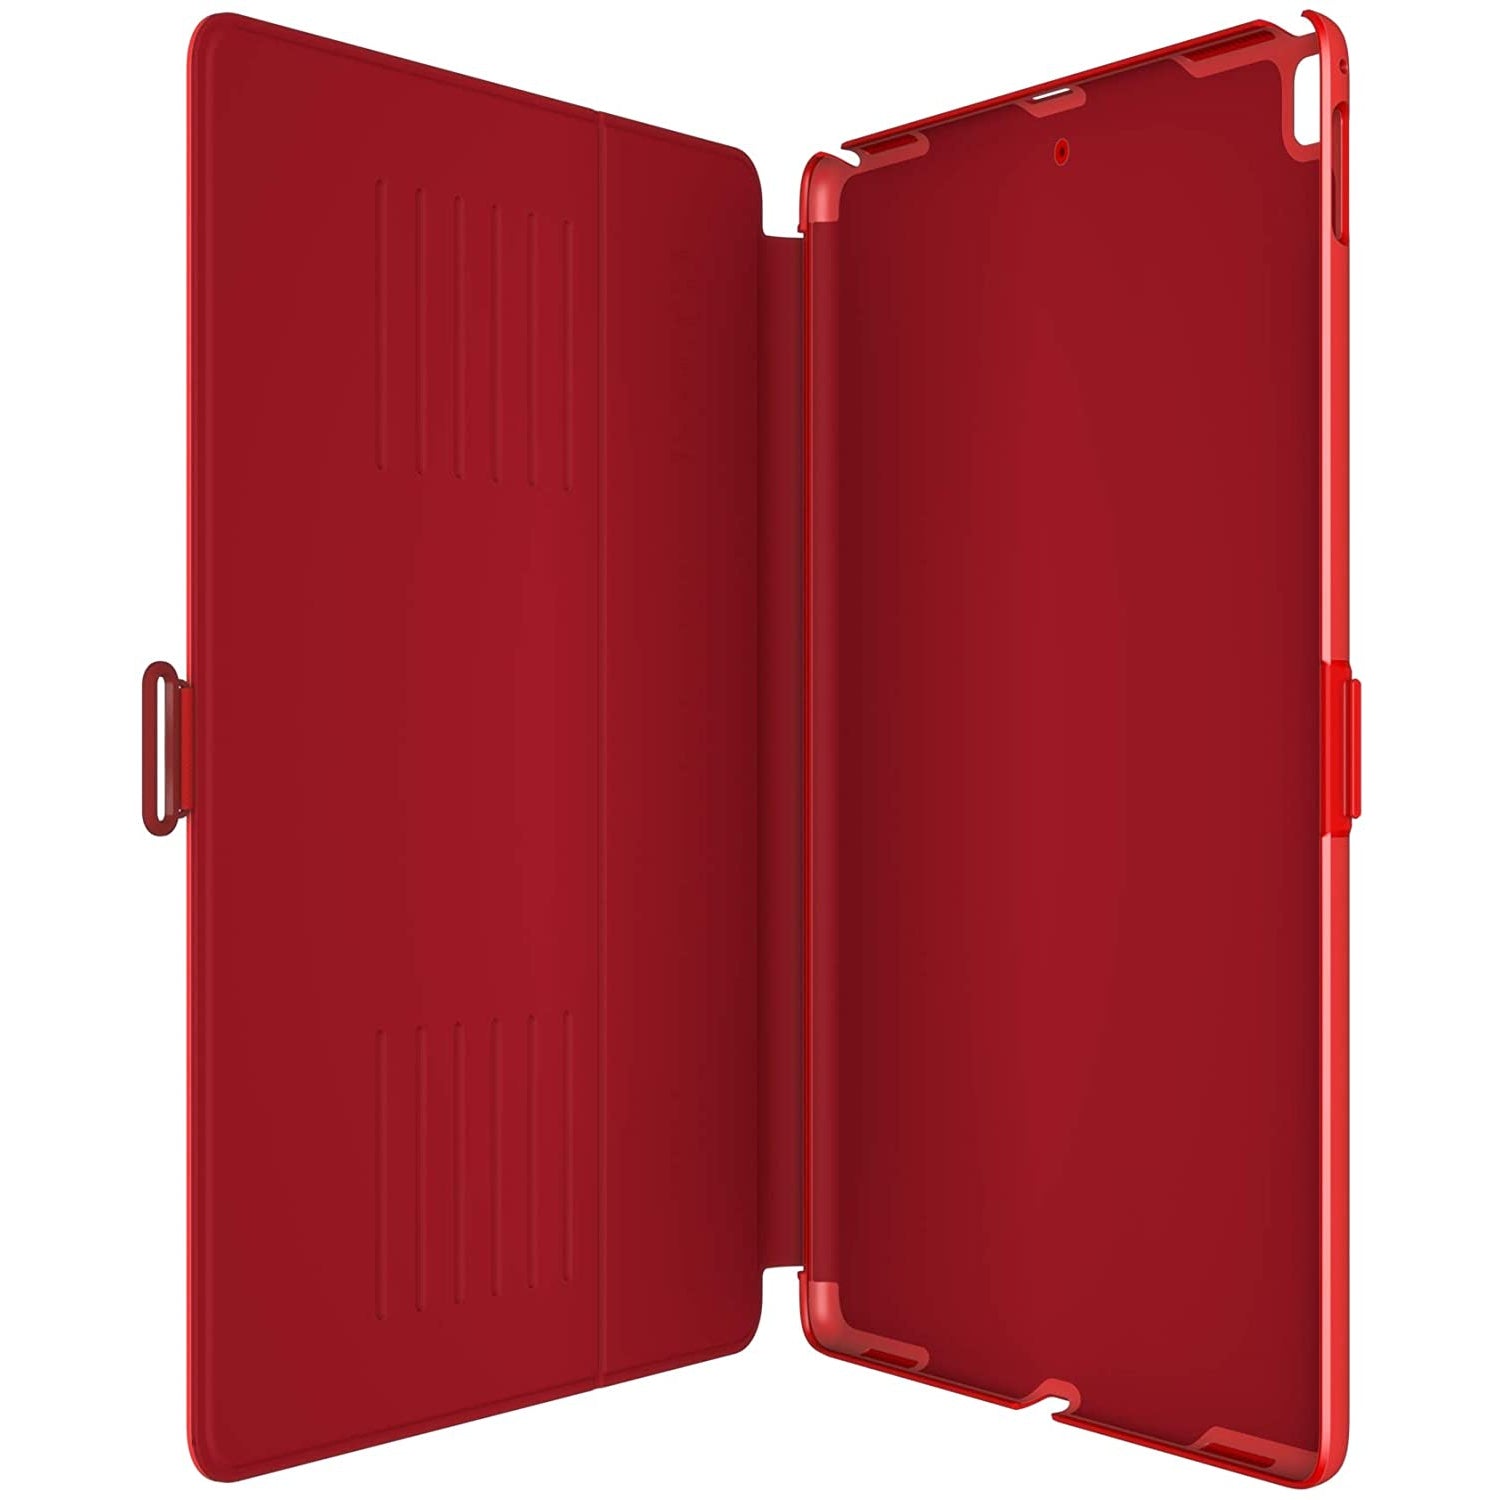 Speck Balance Folio for 9.7" iPad - Red